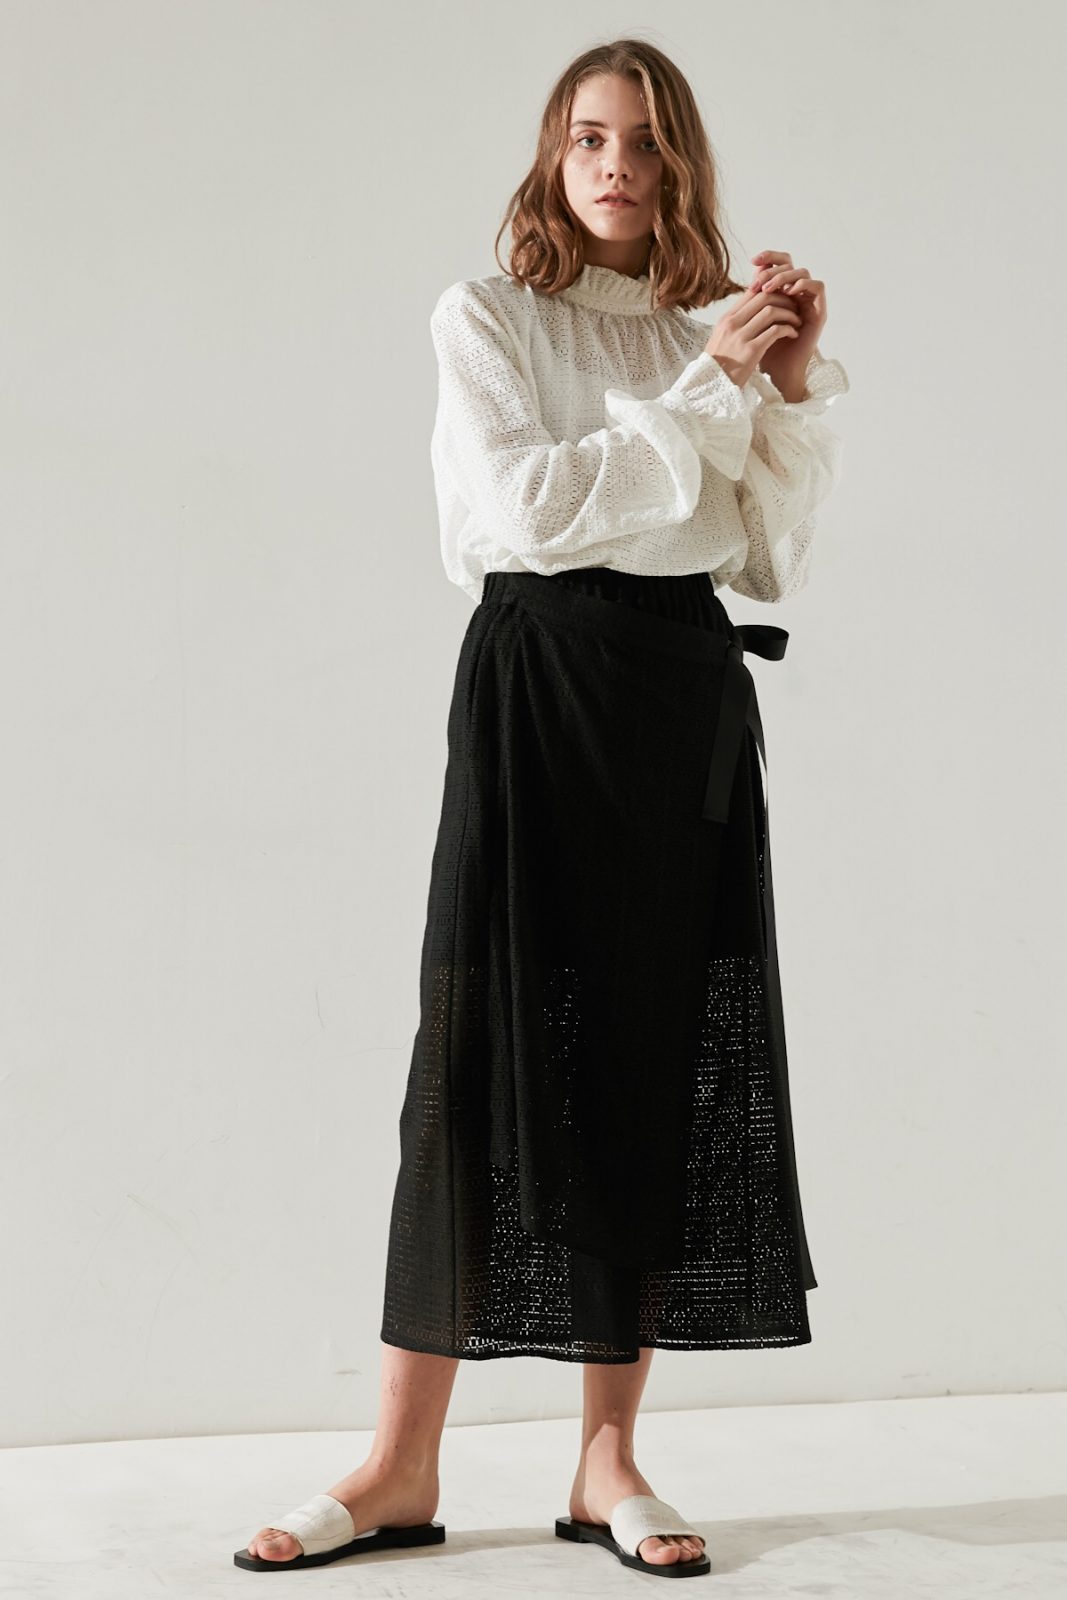 SKYE minimalist women fashion Aria cuolettes lace black